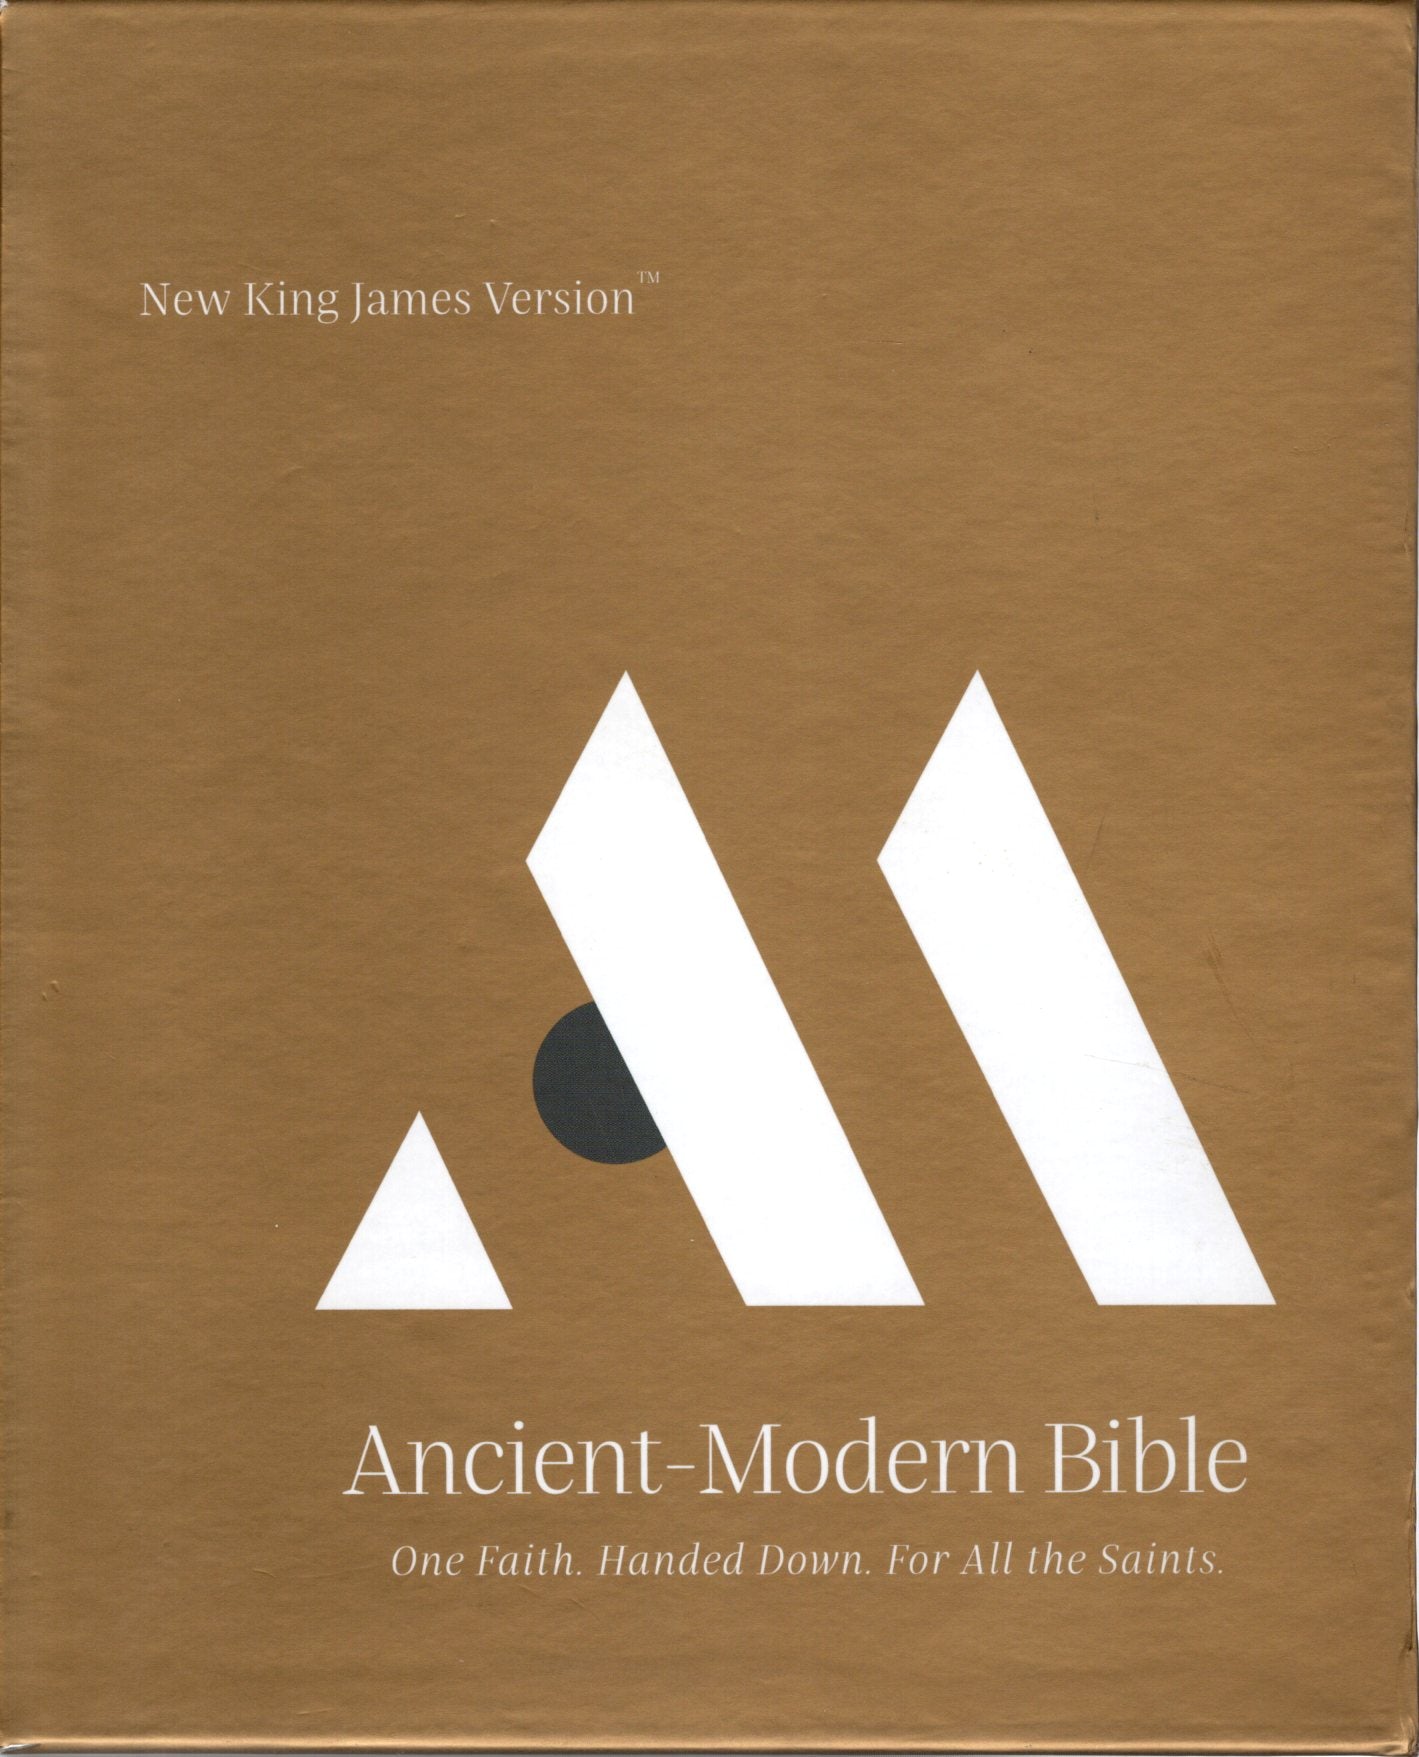 Thomas Nelson NKJV® Ancient-Modern Bible - Leathersoft™ (Brown)